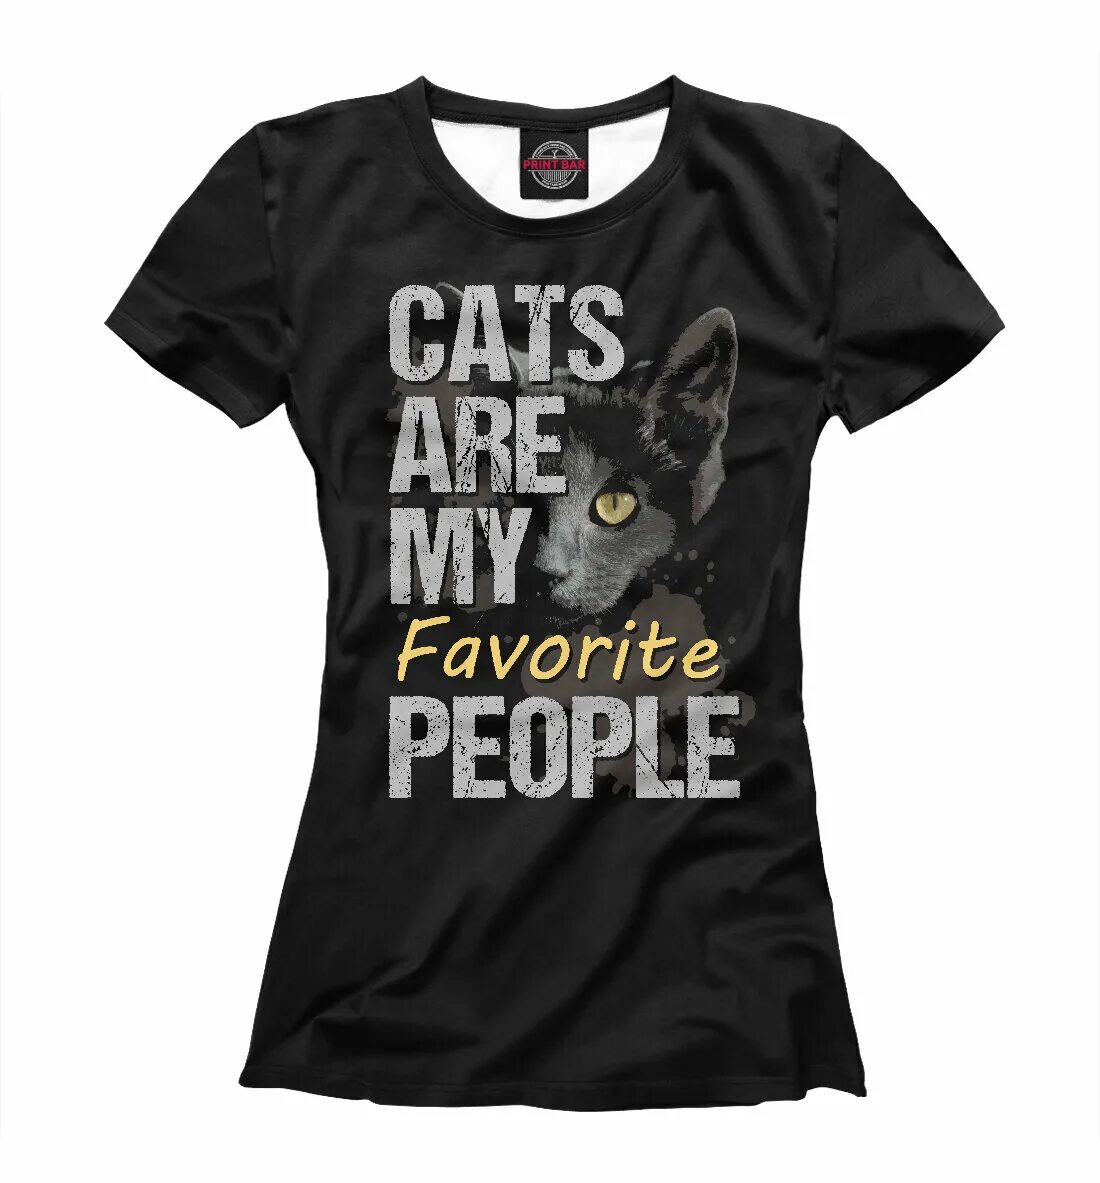 Top favorite. Favorite футболка. Футболка Cat. My child is a Cat футболка. Майка Gods favorite.